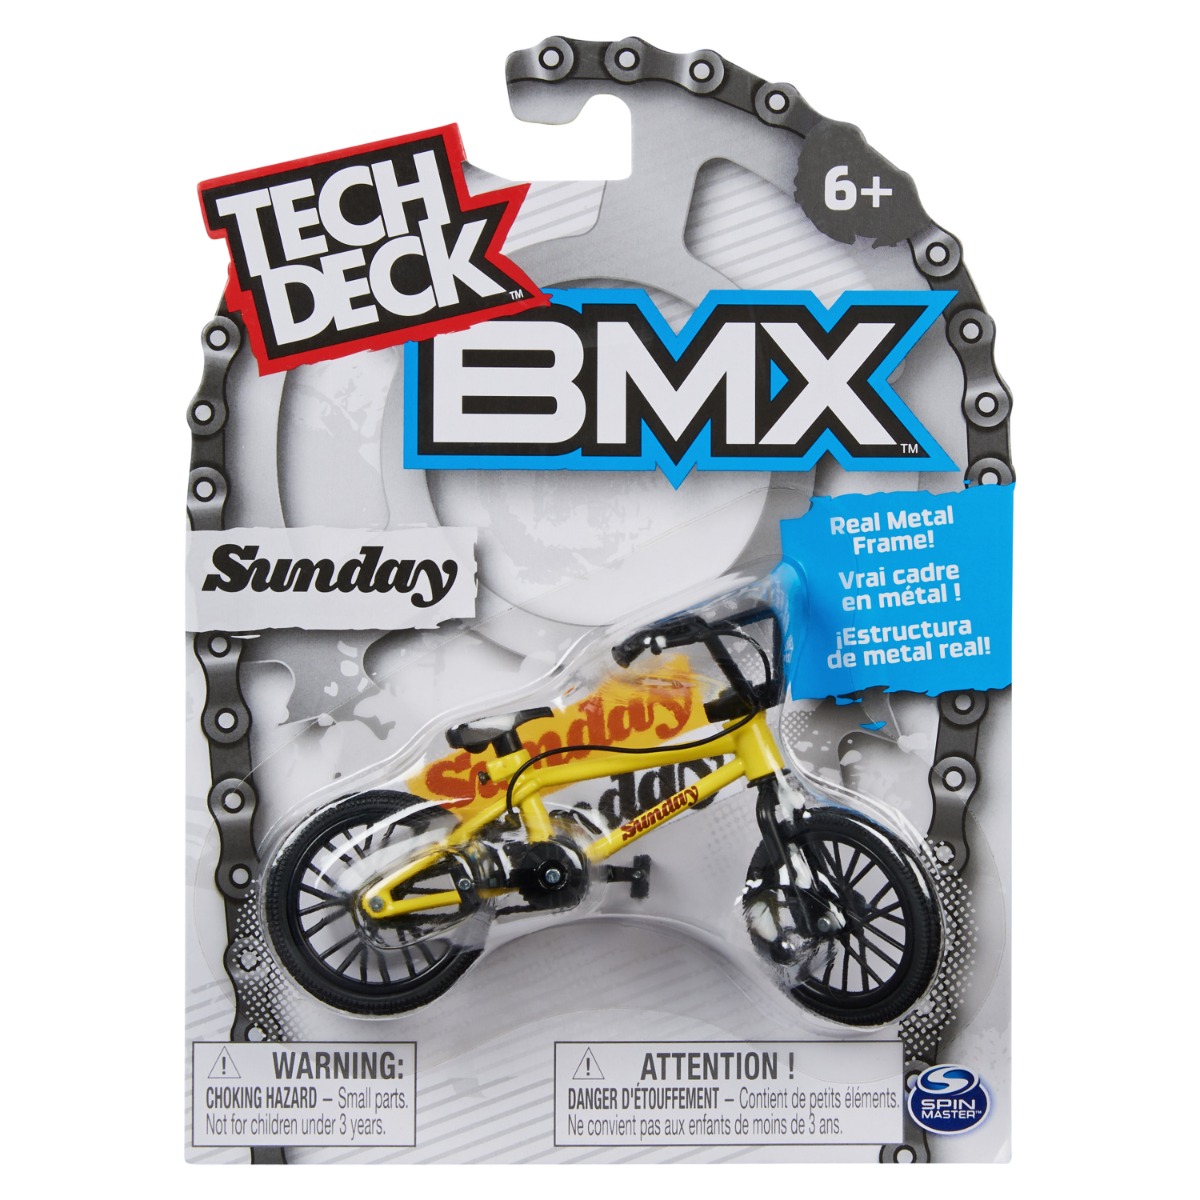 Mini BMX bike, Tech Deck, Sunday, 20140830